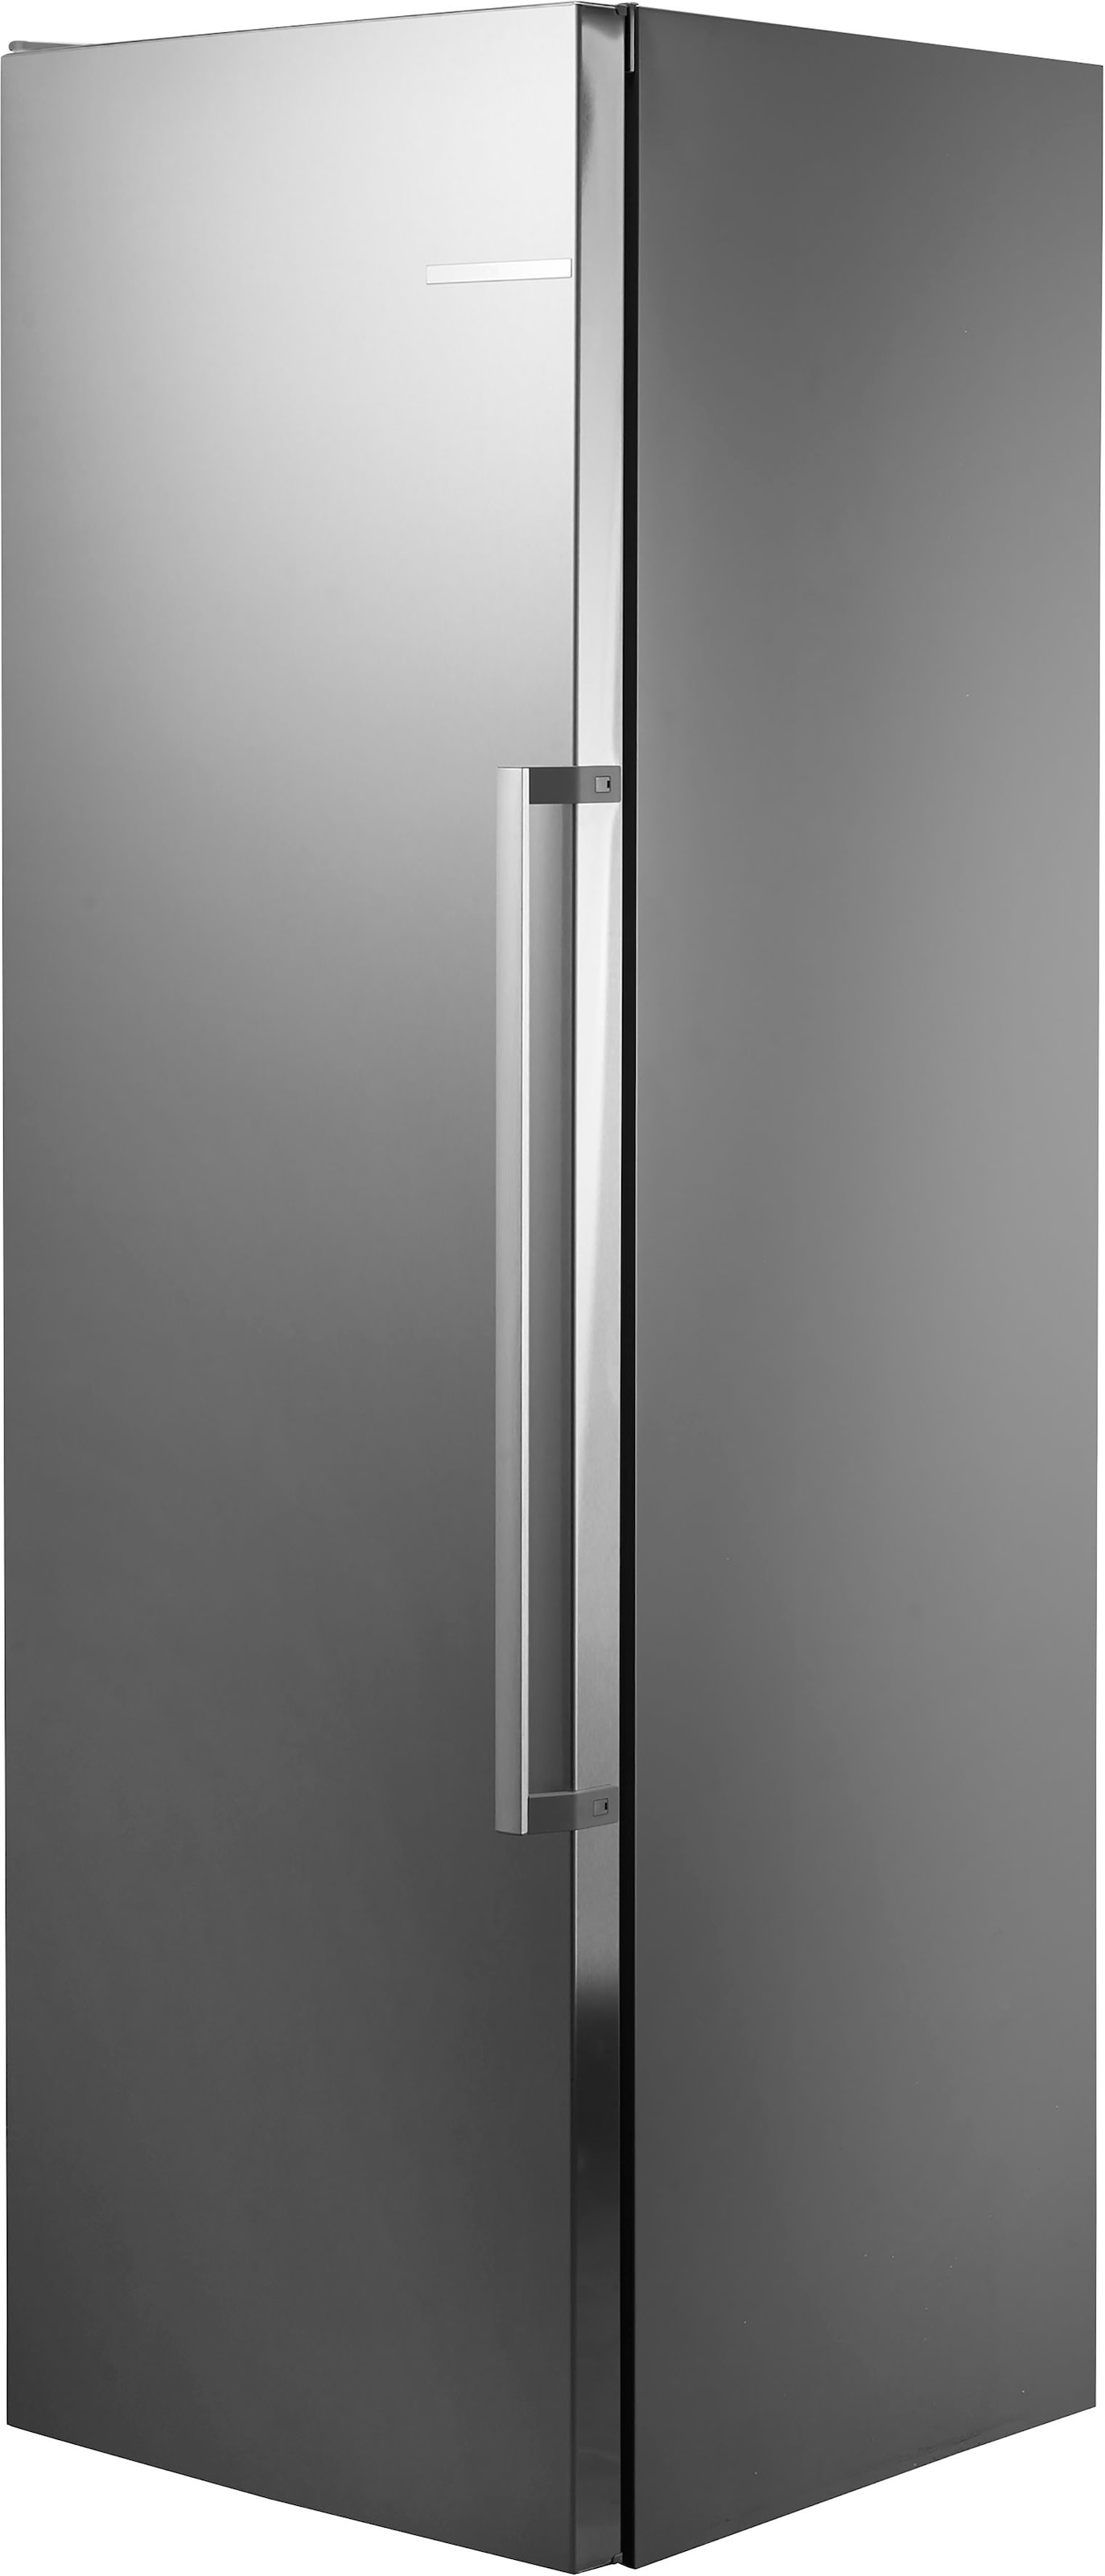 186cm EEK BOSCH KSF36PI4P Stand-Kühlschrank Edelstahl H A+++ 